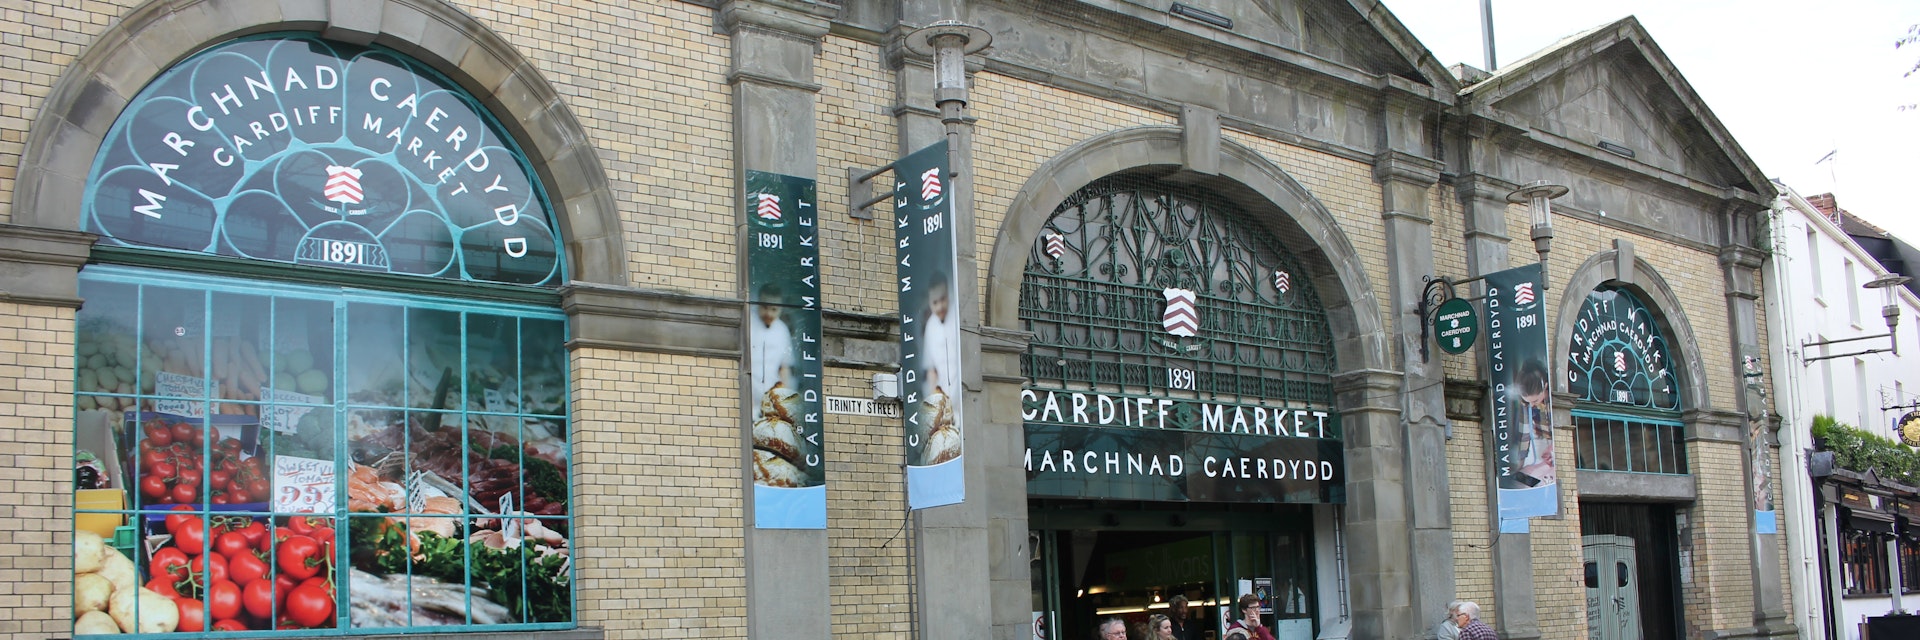 Outside Cardiff Market